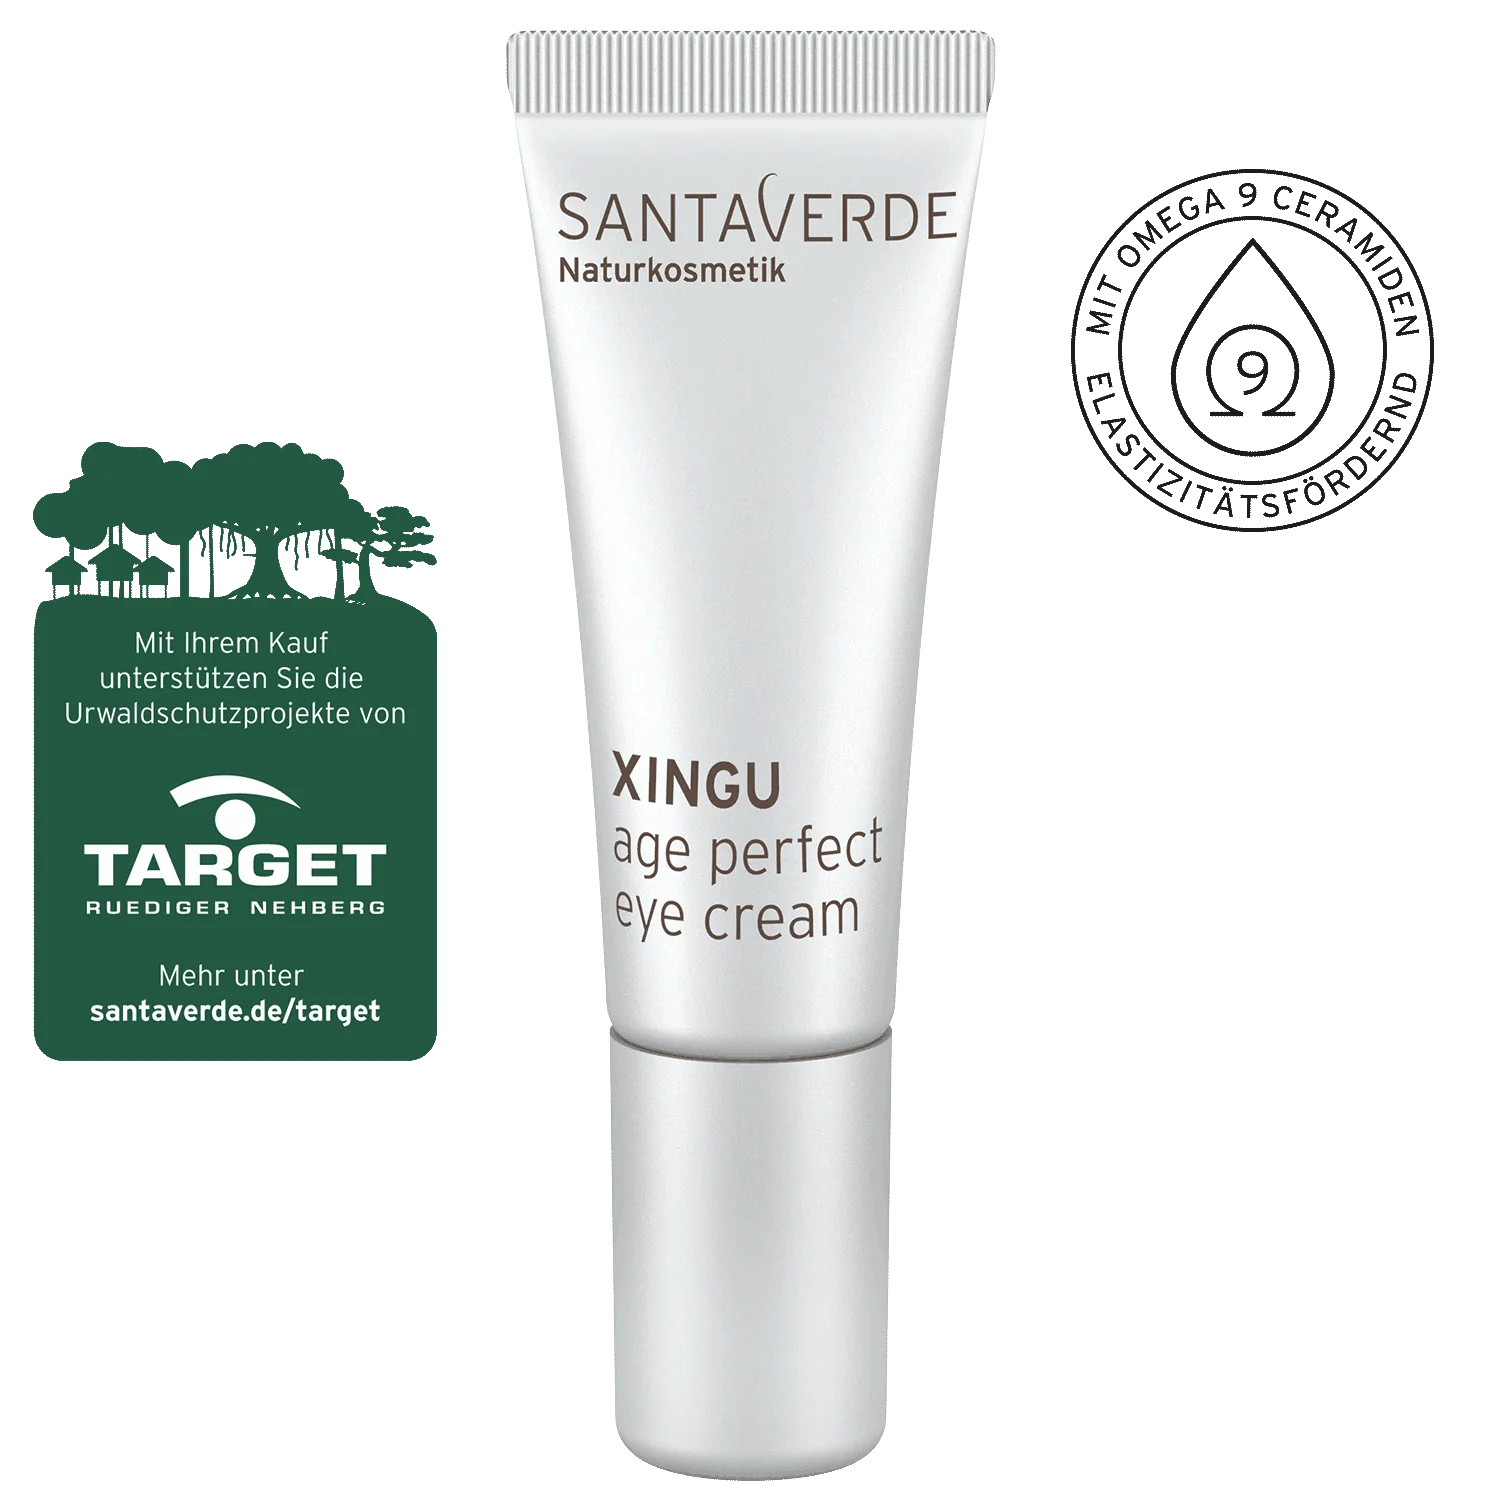 Santaverde XINGU age perfect eye cream | 10ml